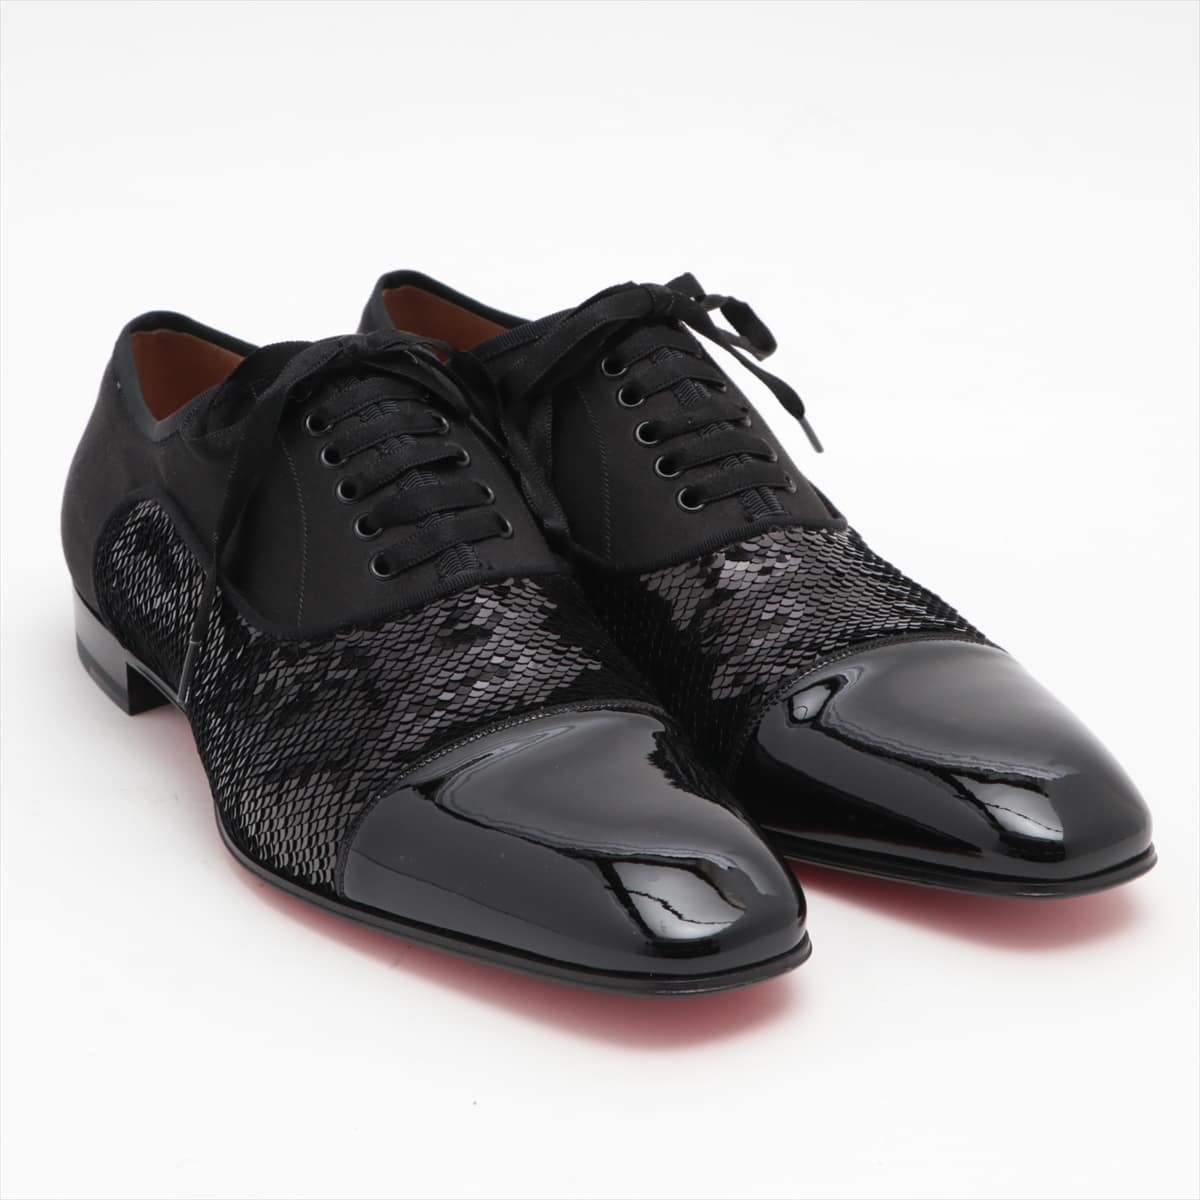 Christian Louboutin Sequins x satin Dress shoes 42 Men's Black Enamel